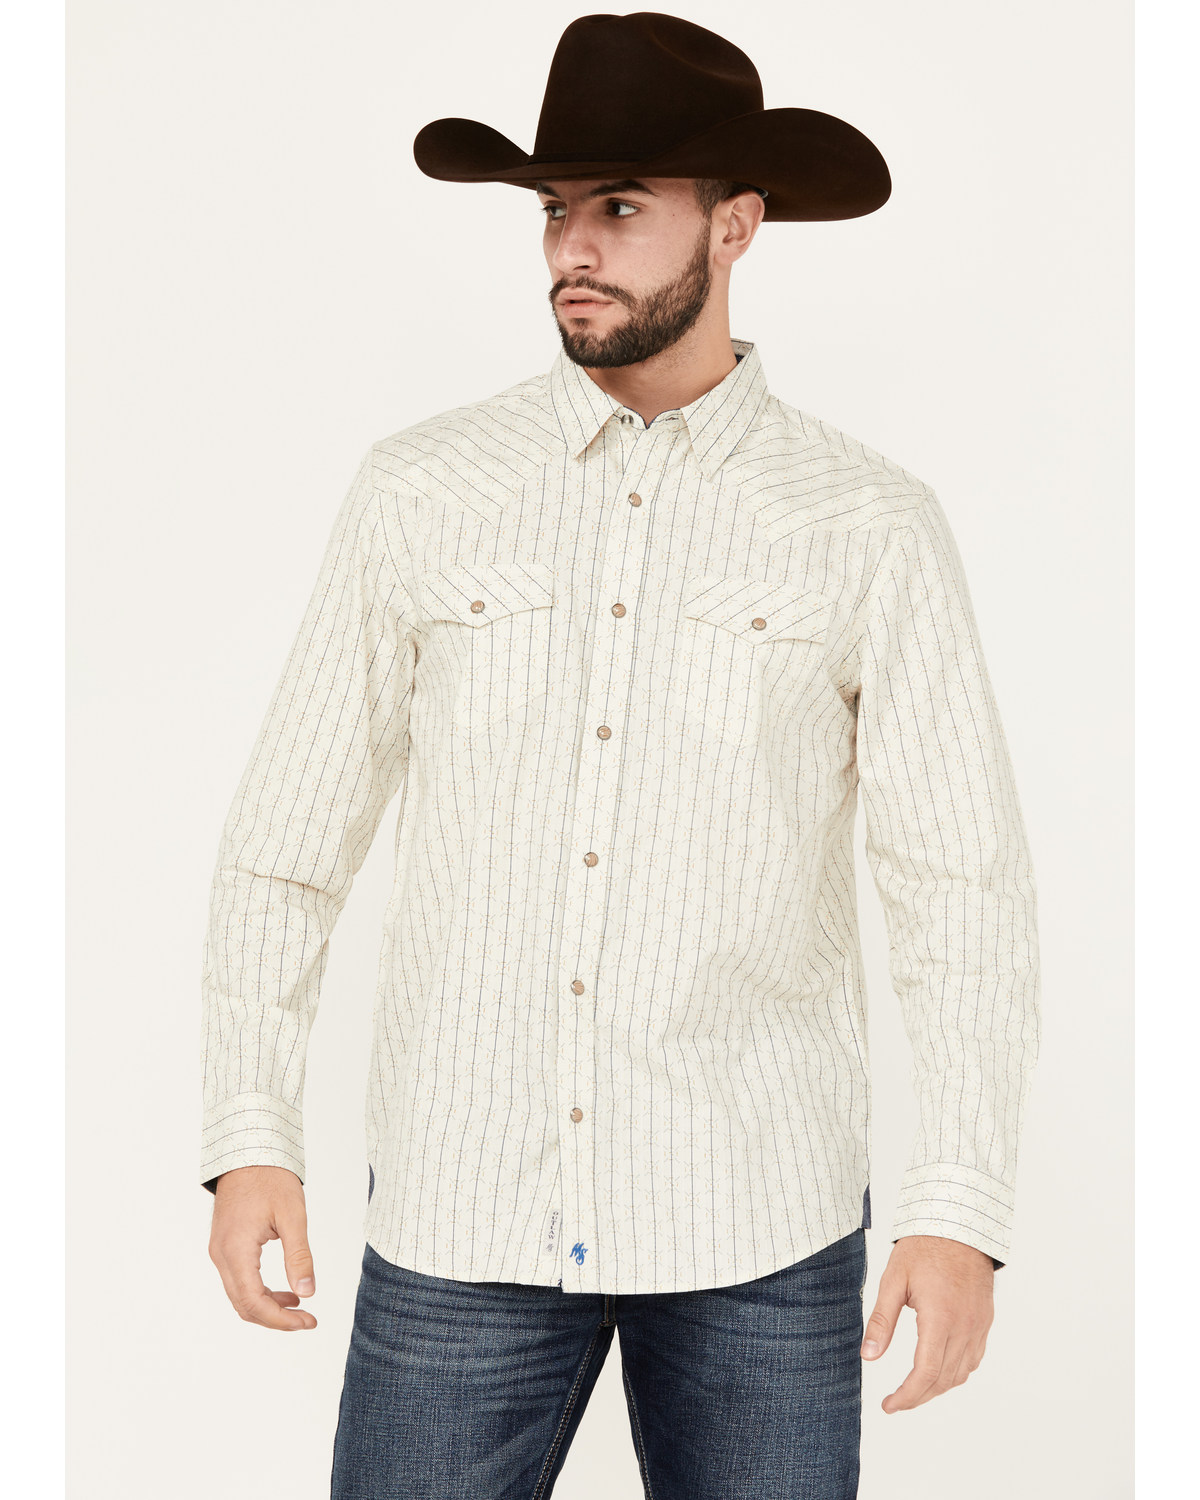 Moonshine Spirit Men's Uptown Geo Dobby Striped Print Long Sleeve Snap Western Shirt